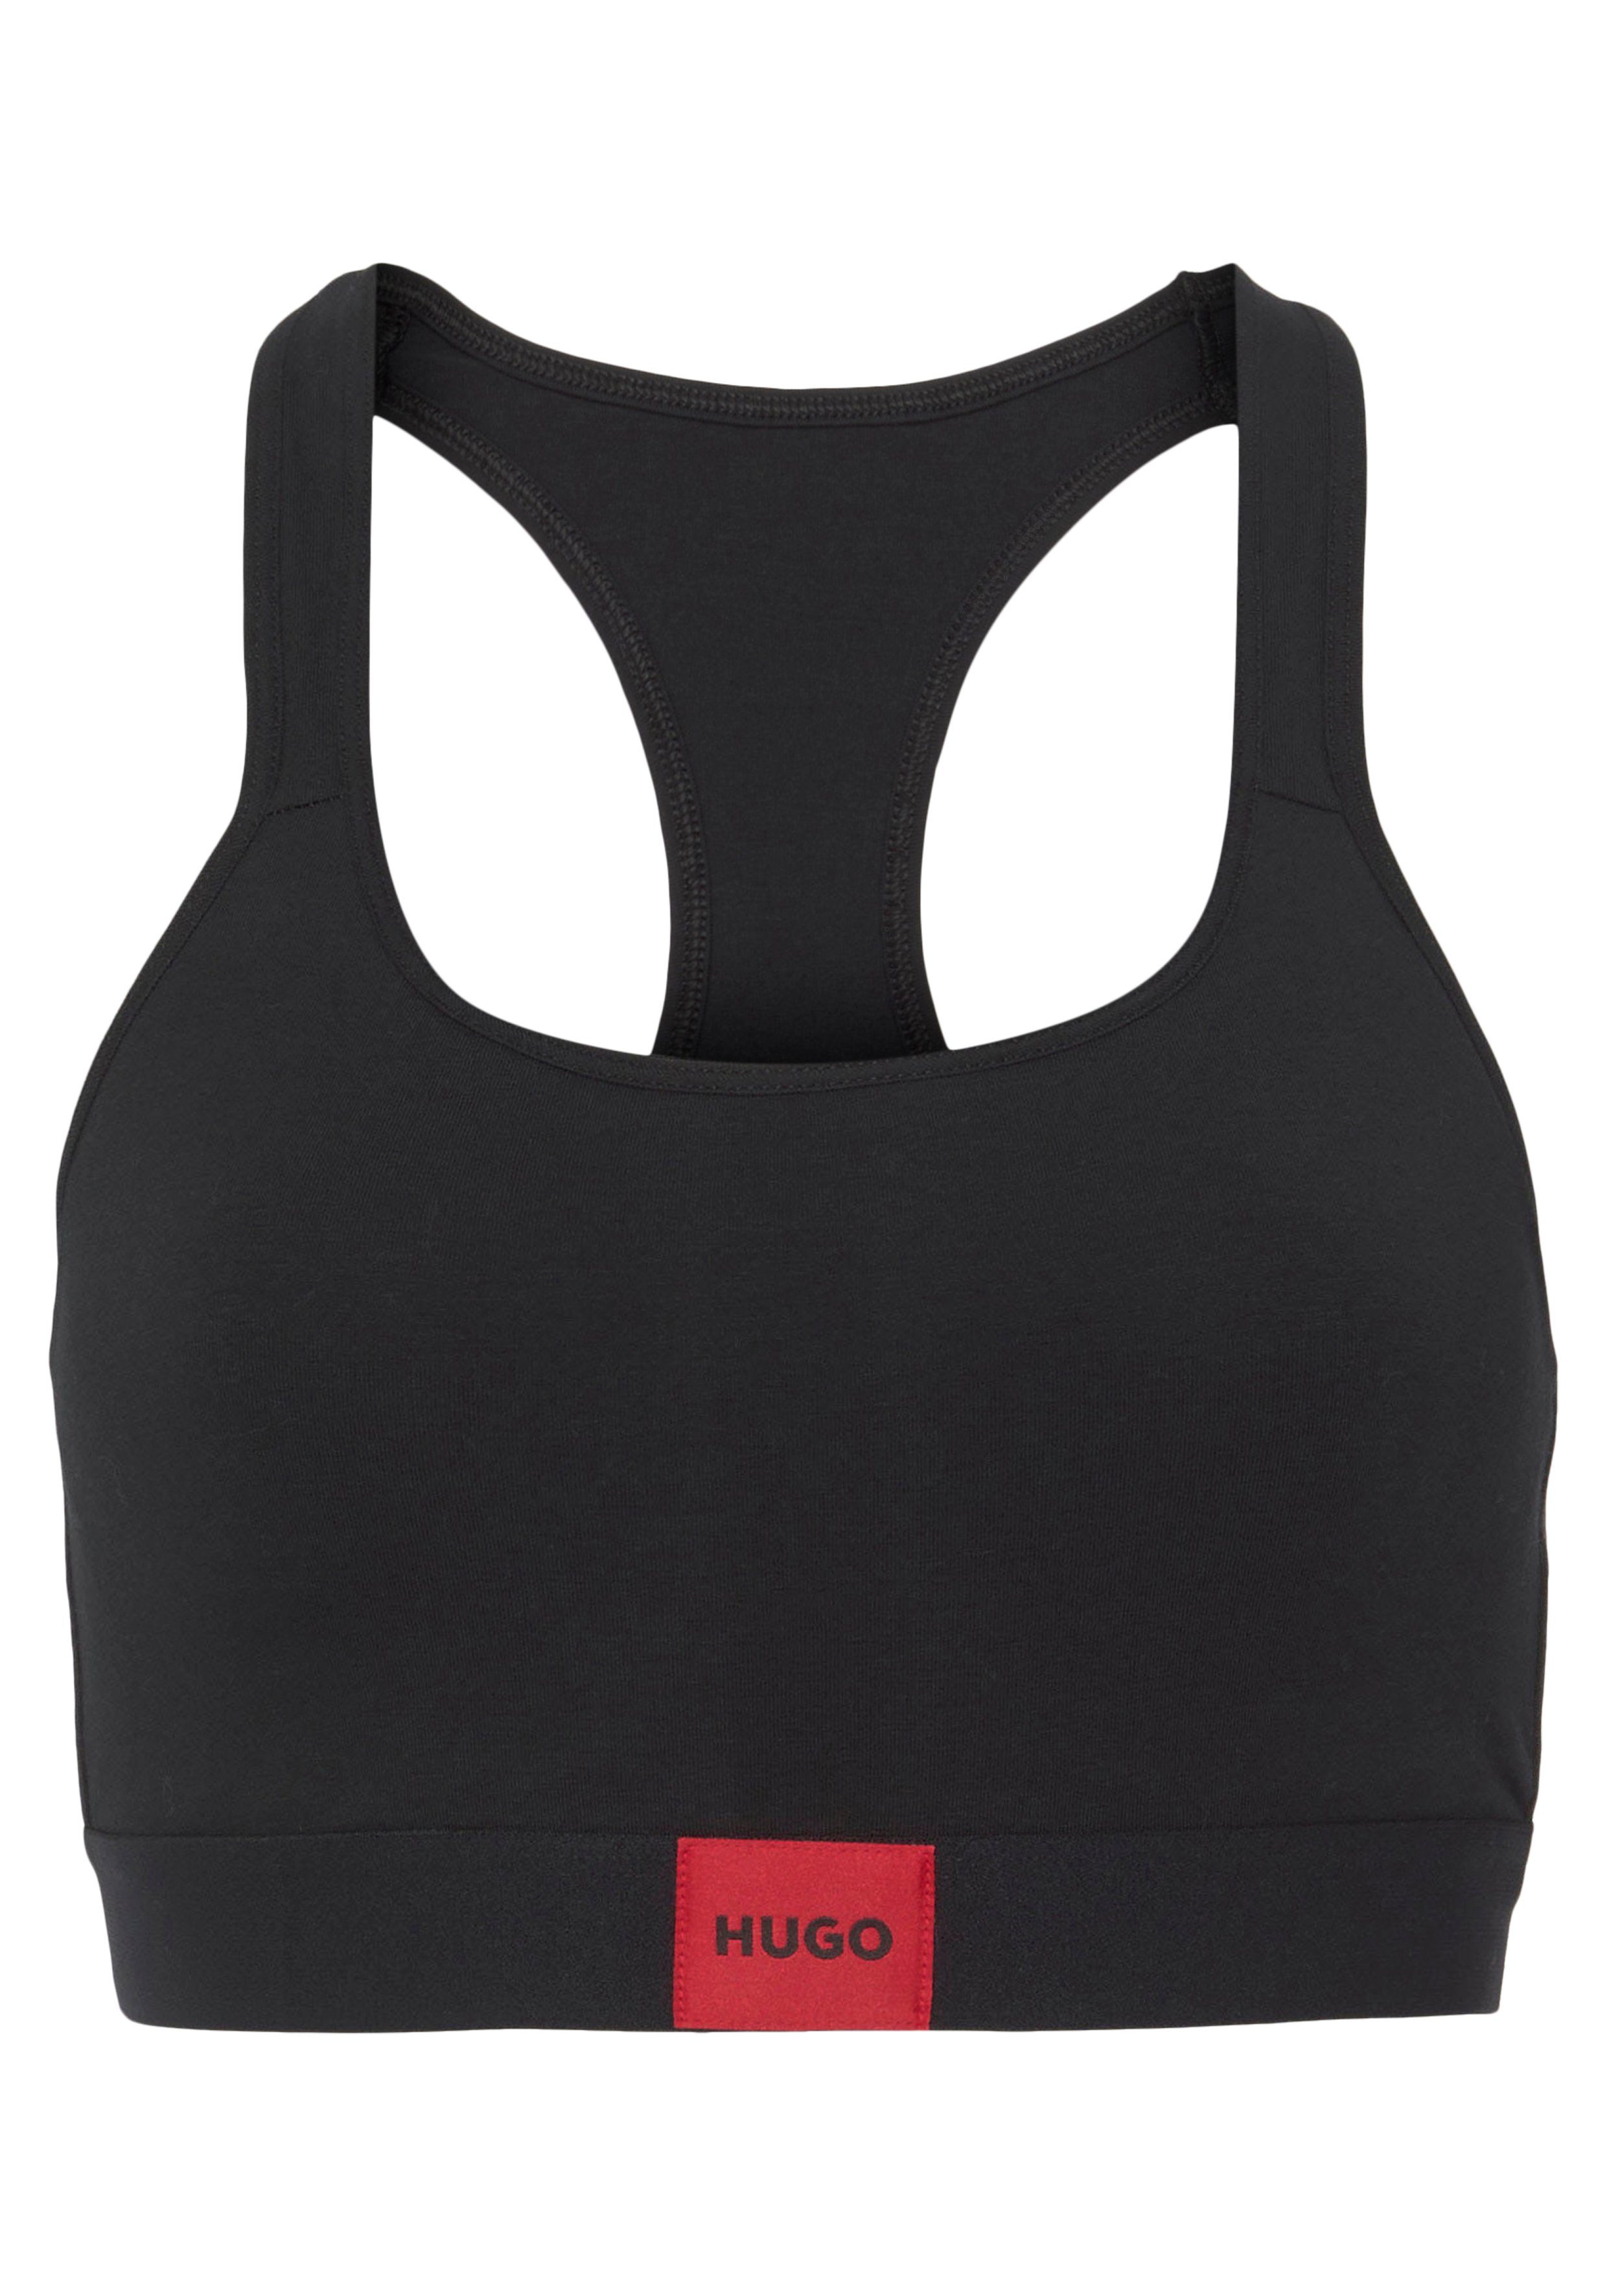 HUGO Bralette-BH BRALETTE PAD.RED LAB mit aufgesticktem HUGO BOSS Logo Black | Bralettes